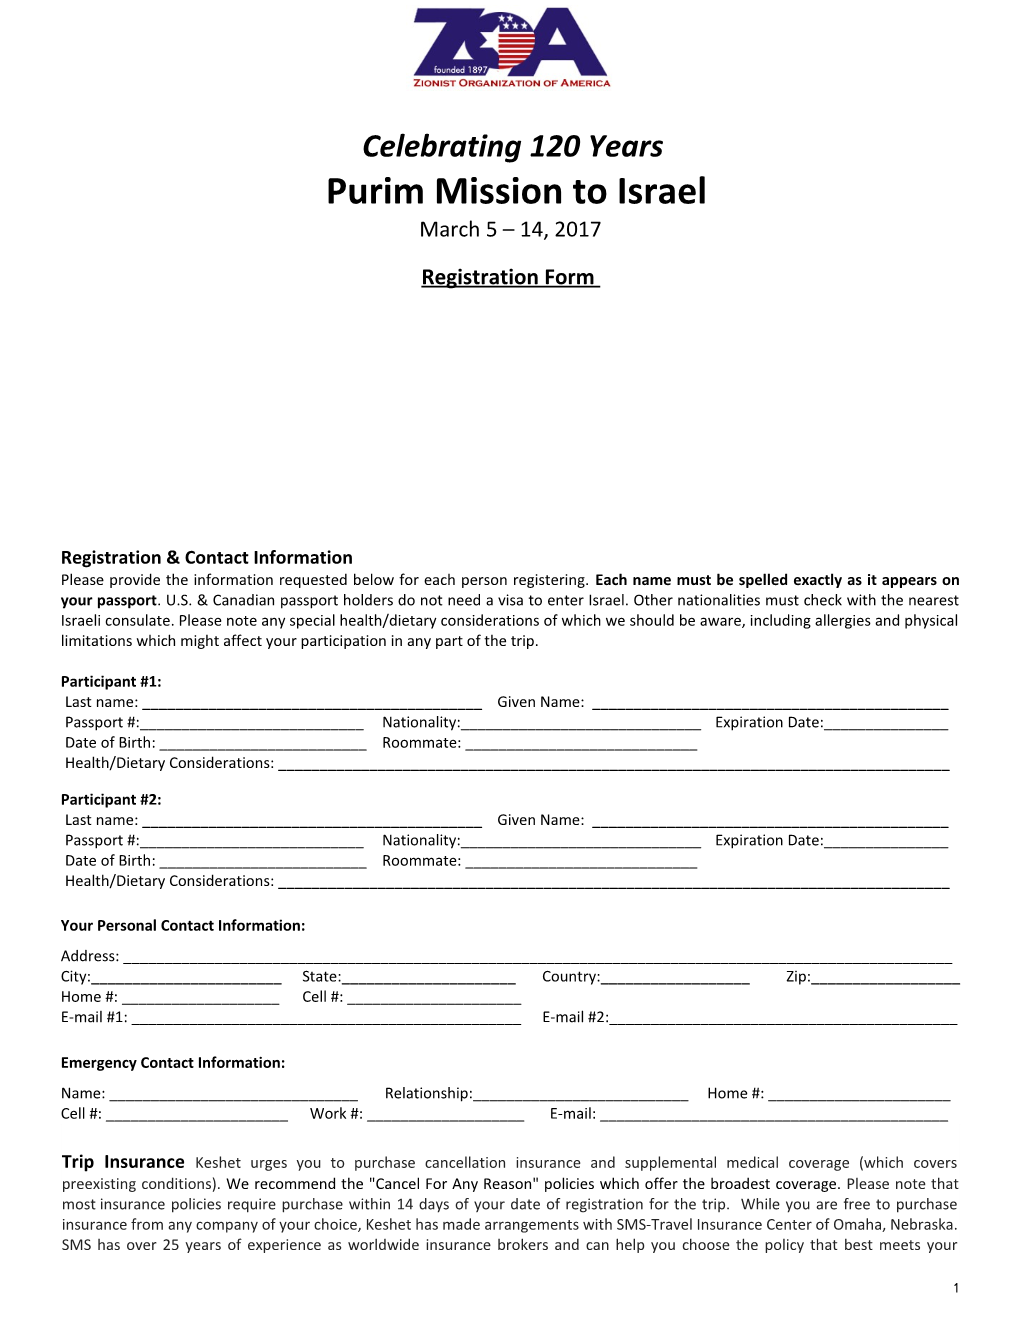 Registration Form (Page 2) ZOA 2017Purim Mission